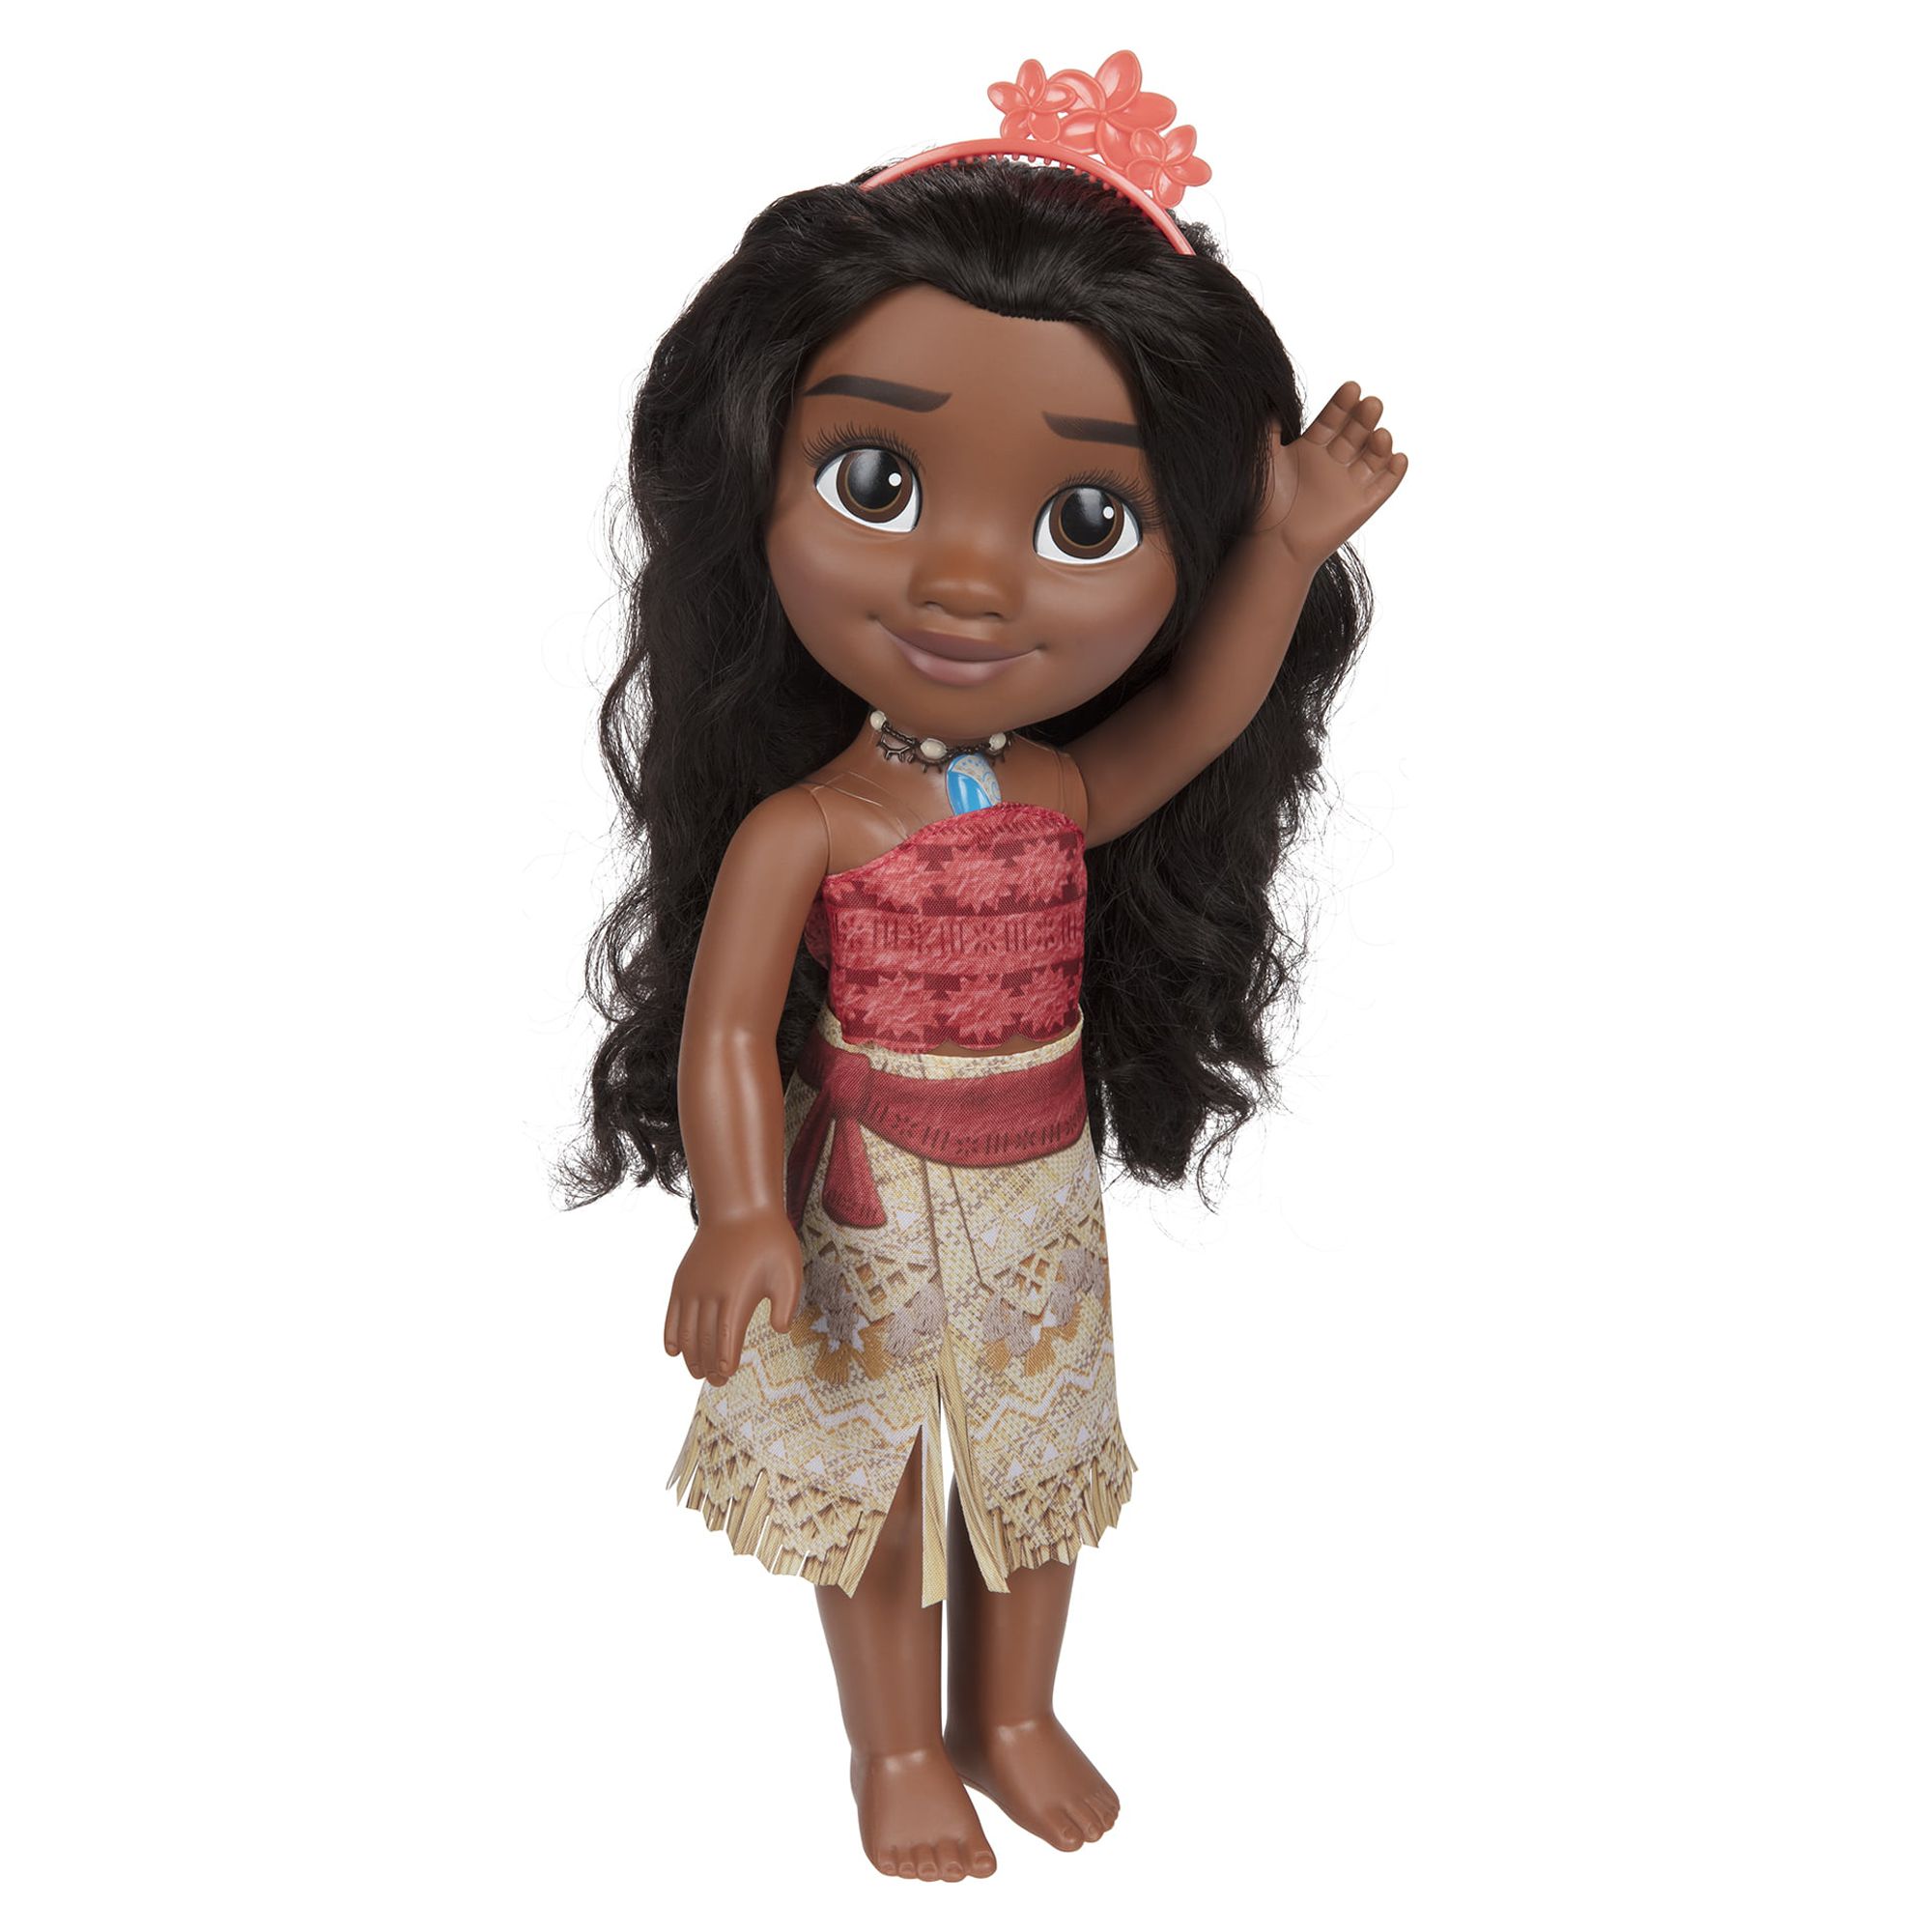 Disney Princess My Friend Moana Doll with Child Size Dress Gift Set - image 5 of 10